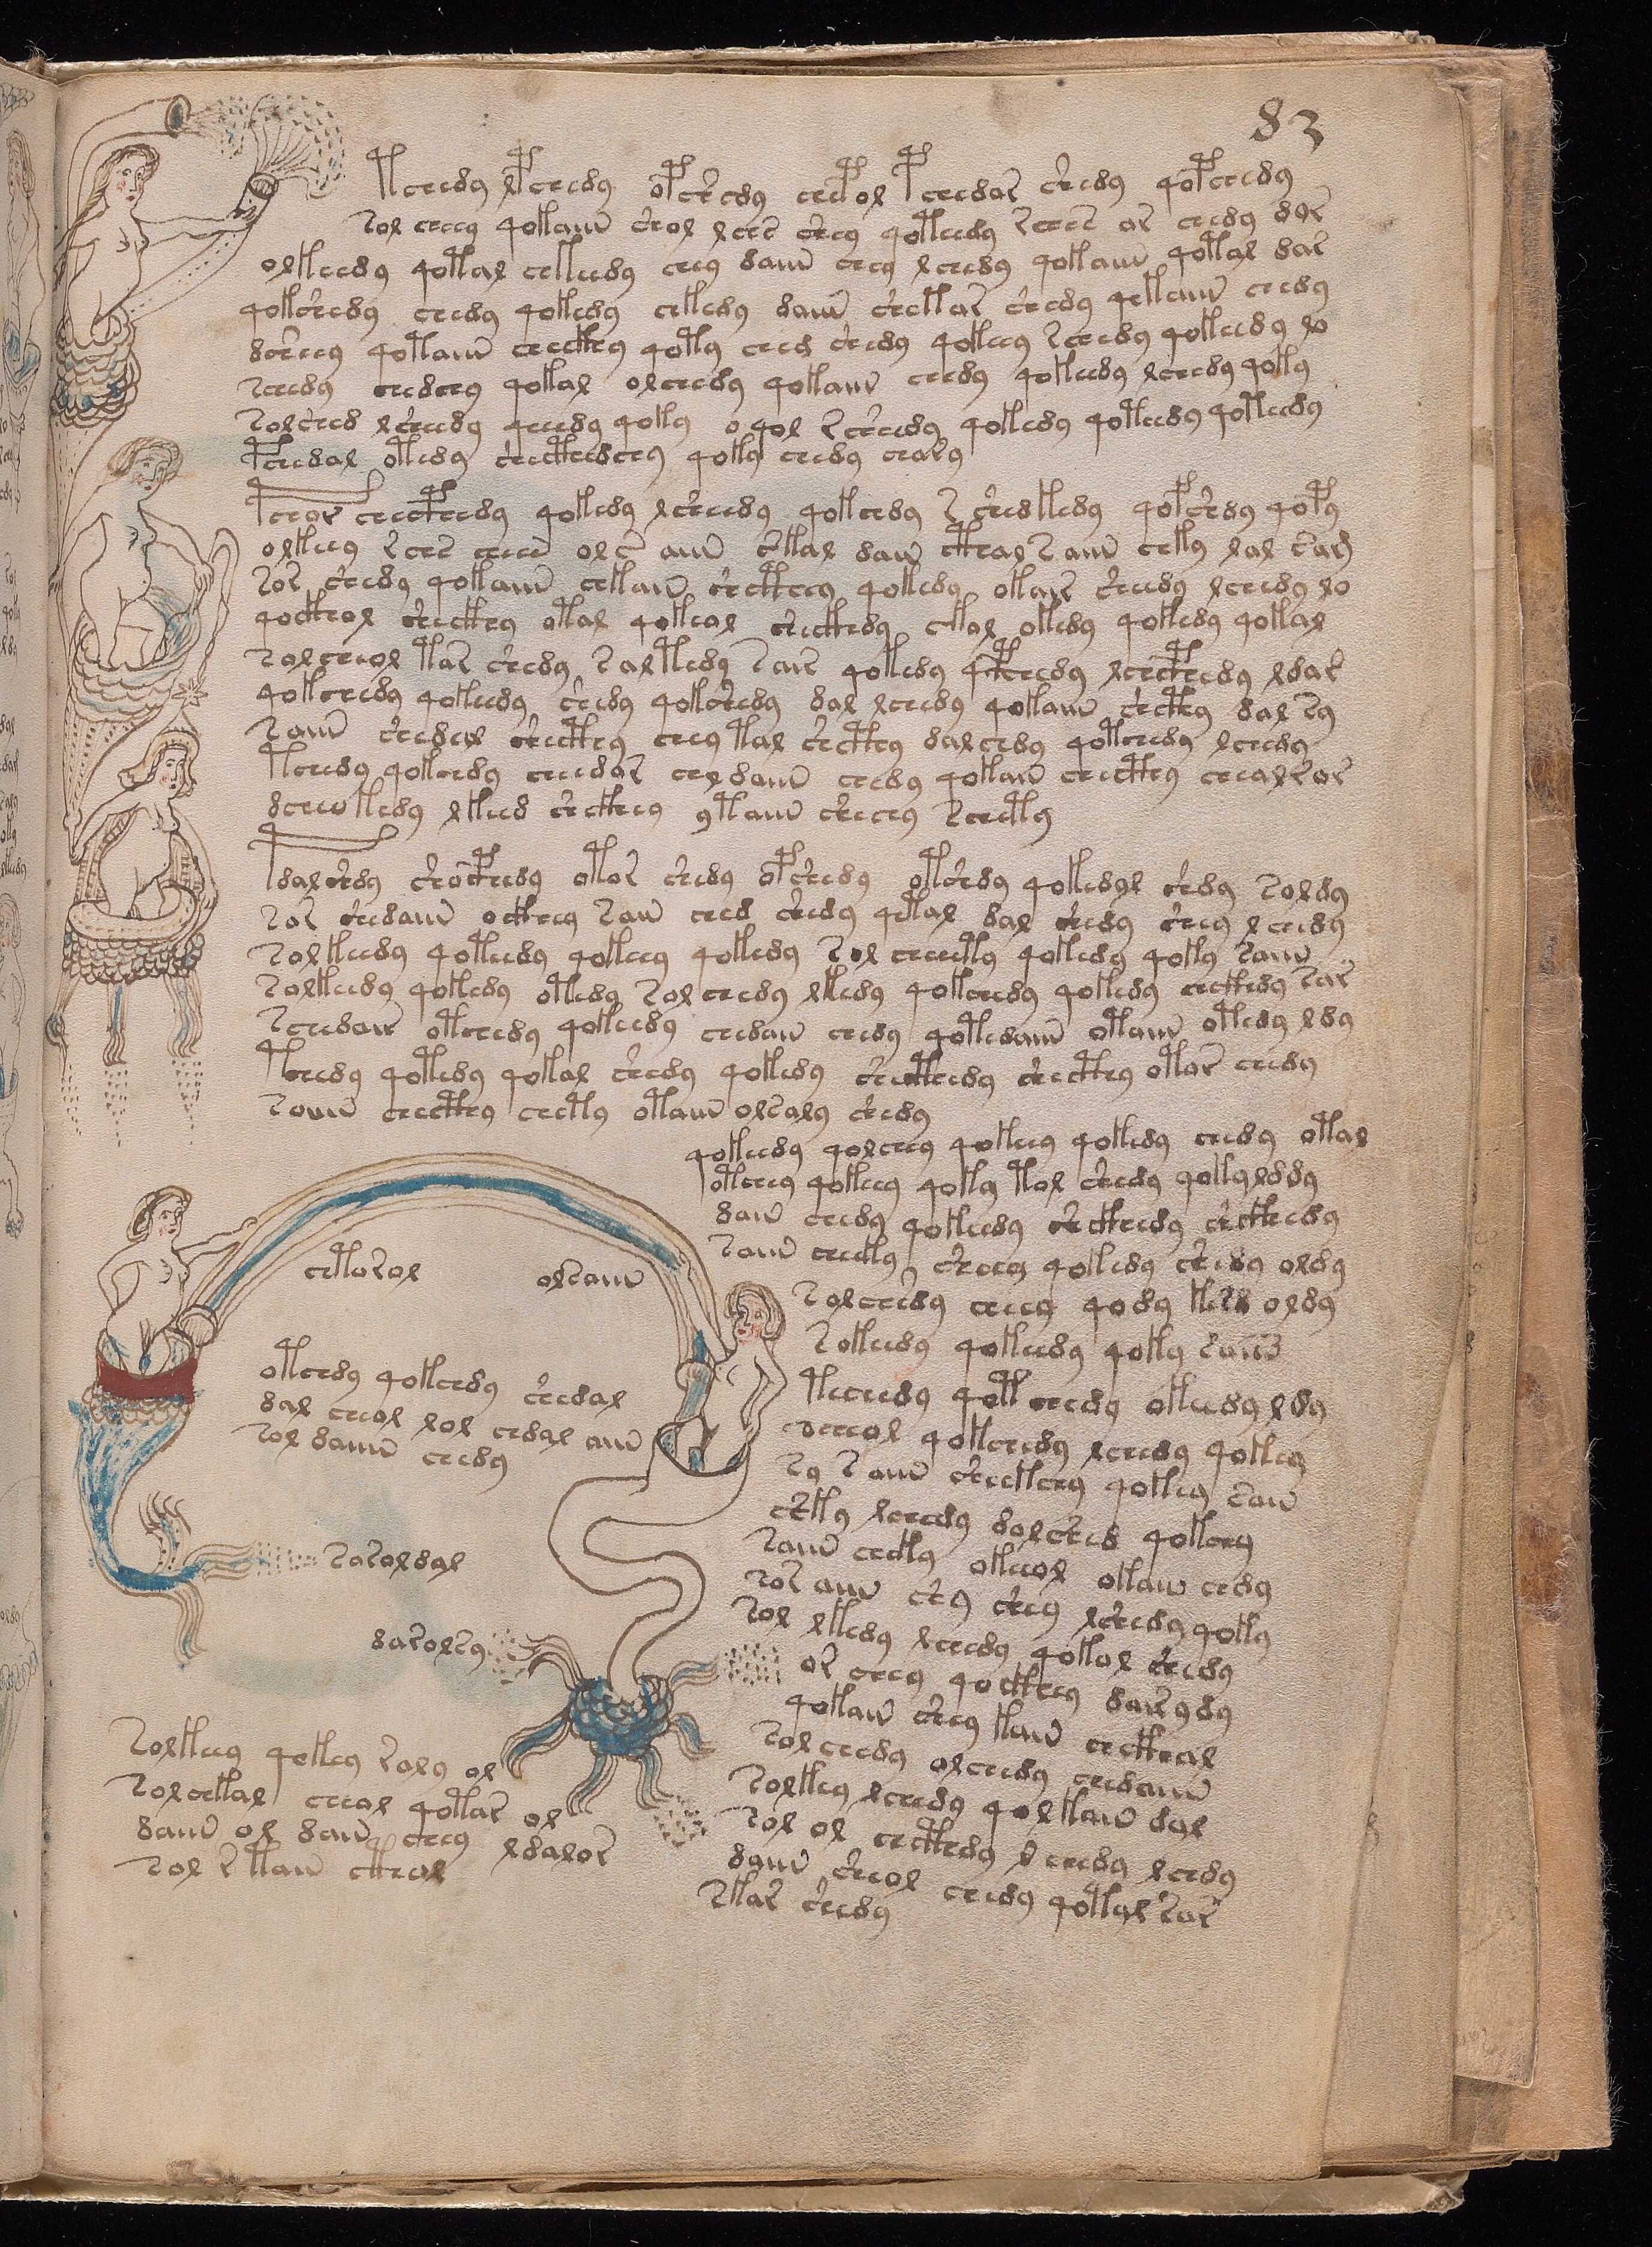 Voynich manuscript reproduction coming